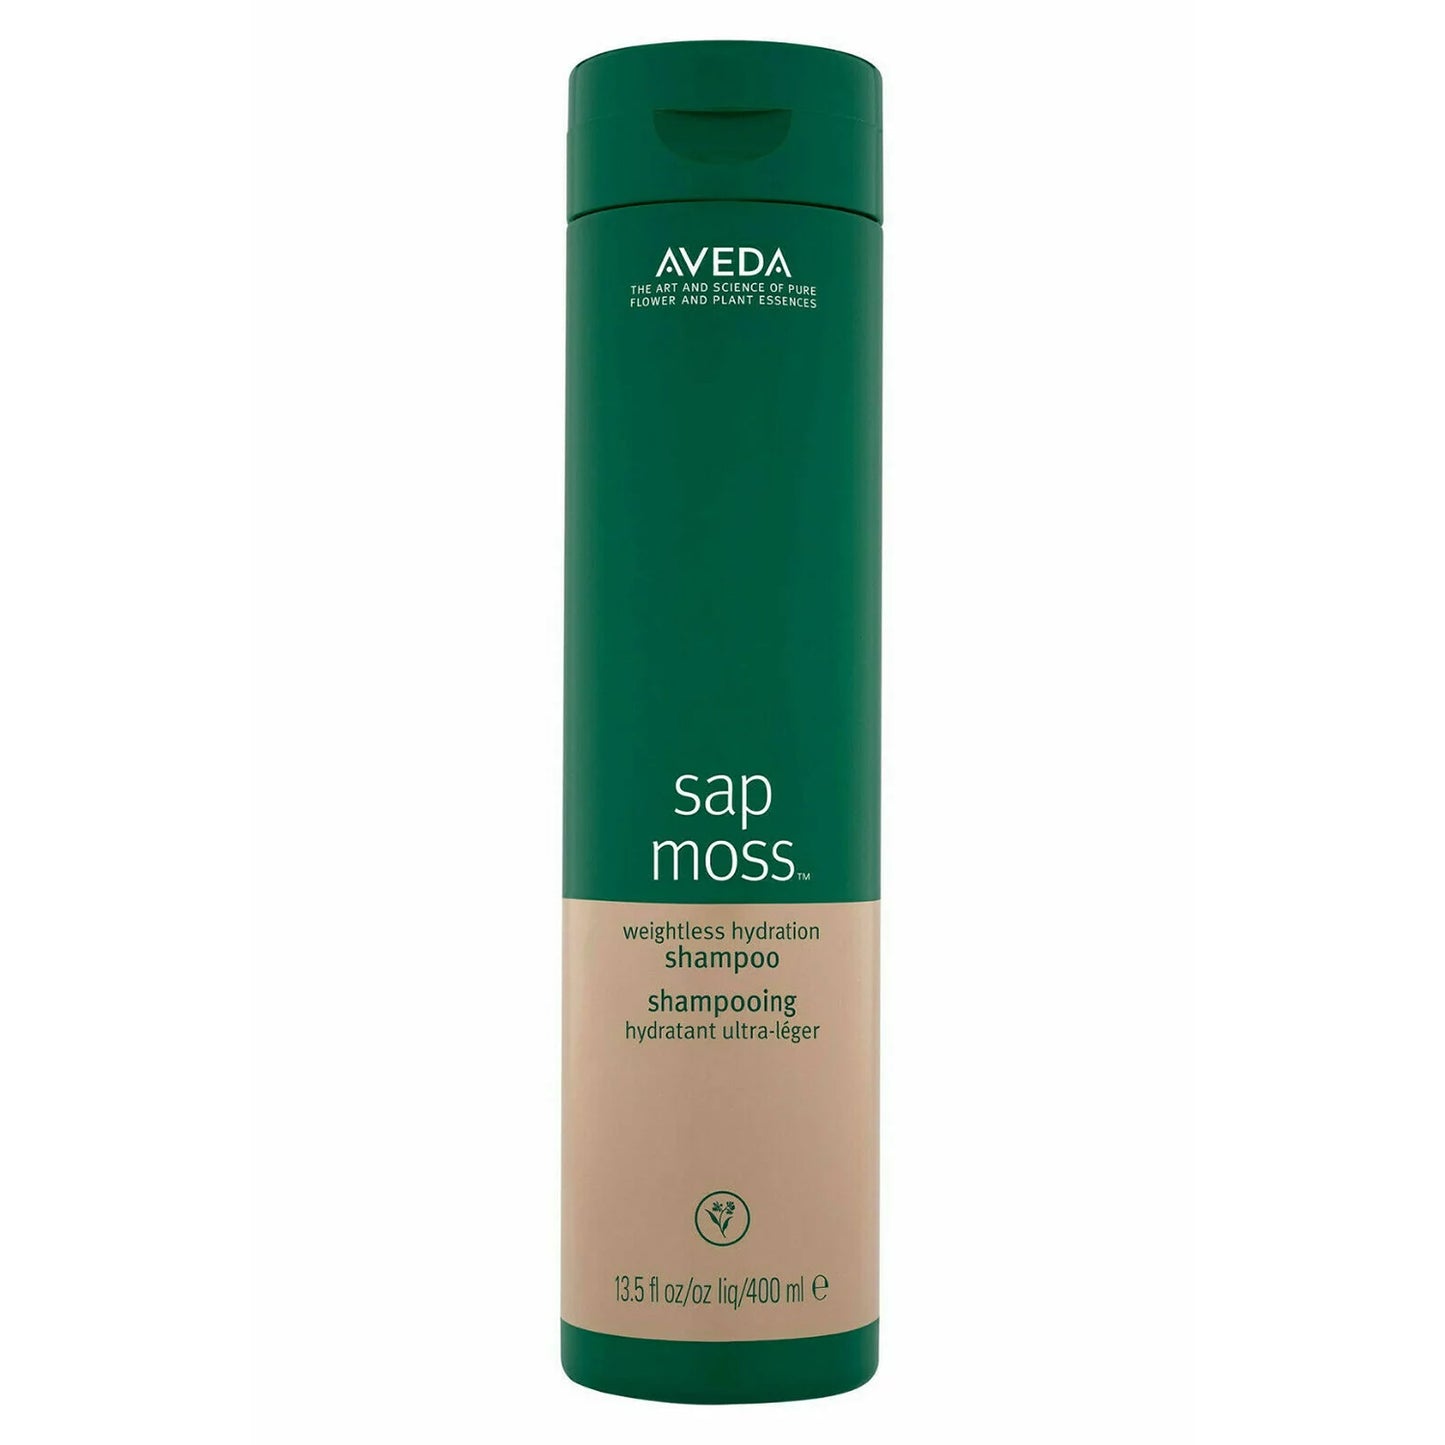 AVEDA Sap moss- Weightless hydration Shampoo 400ml